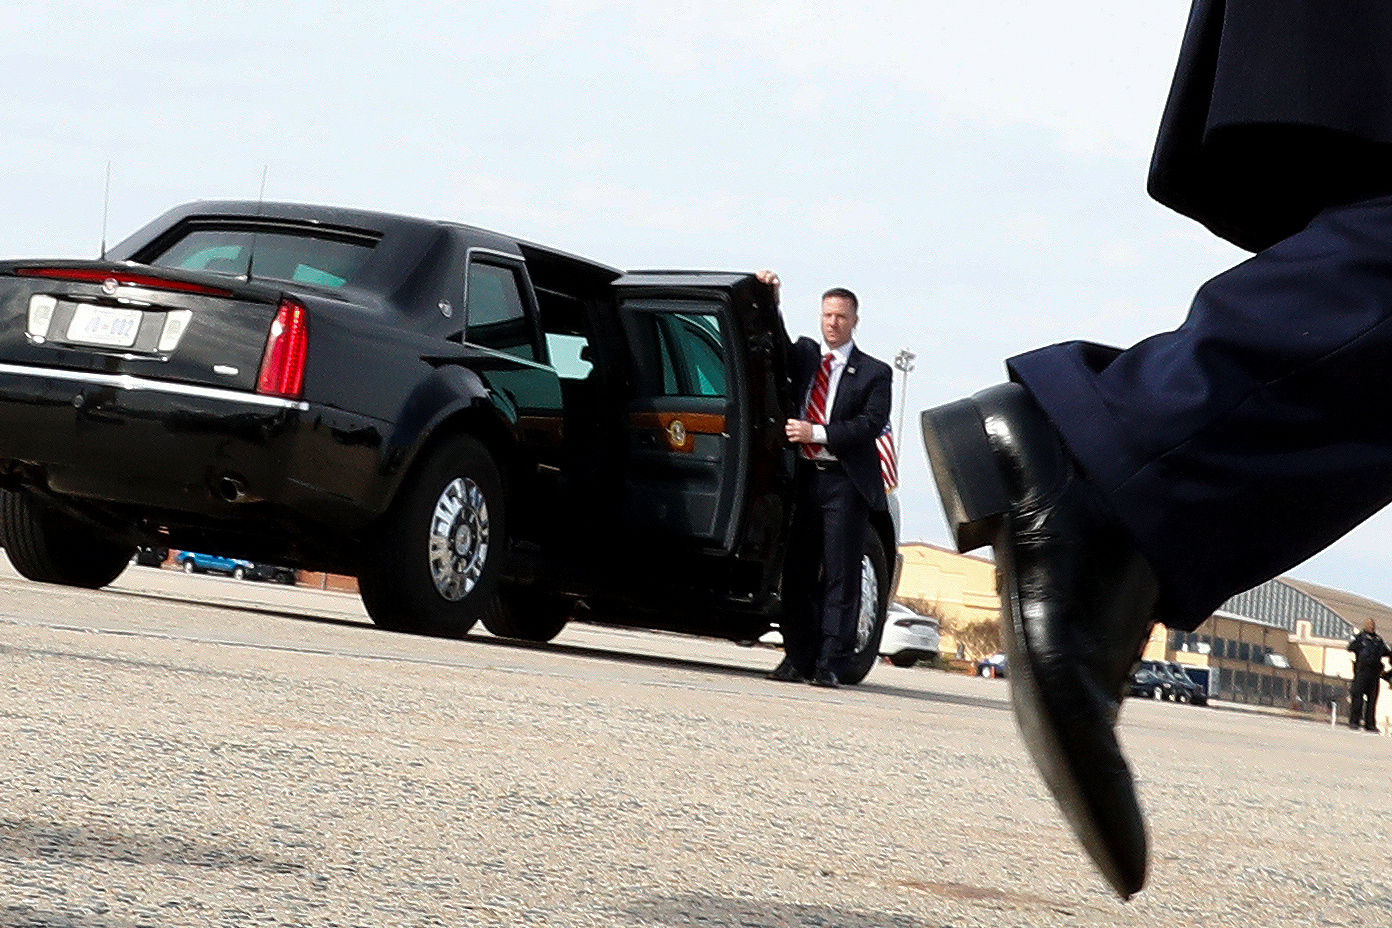 File photo of Donald Trump's official limousine.